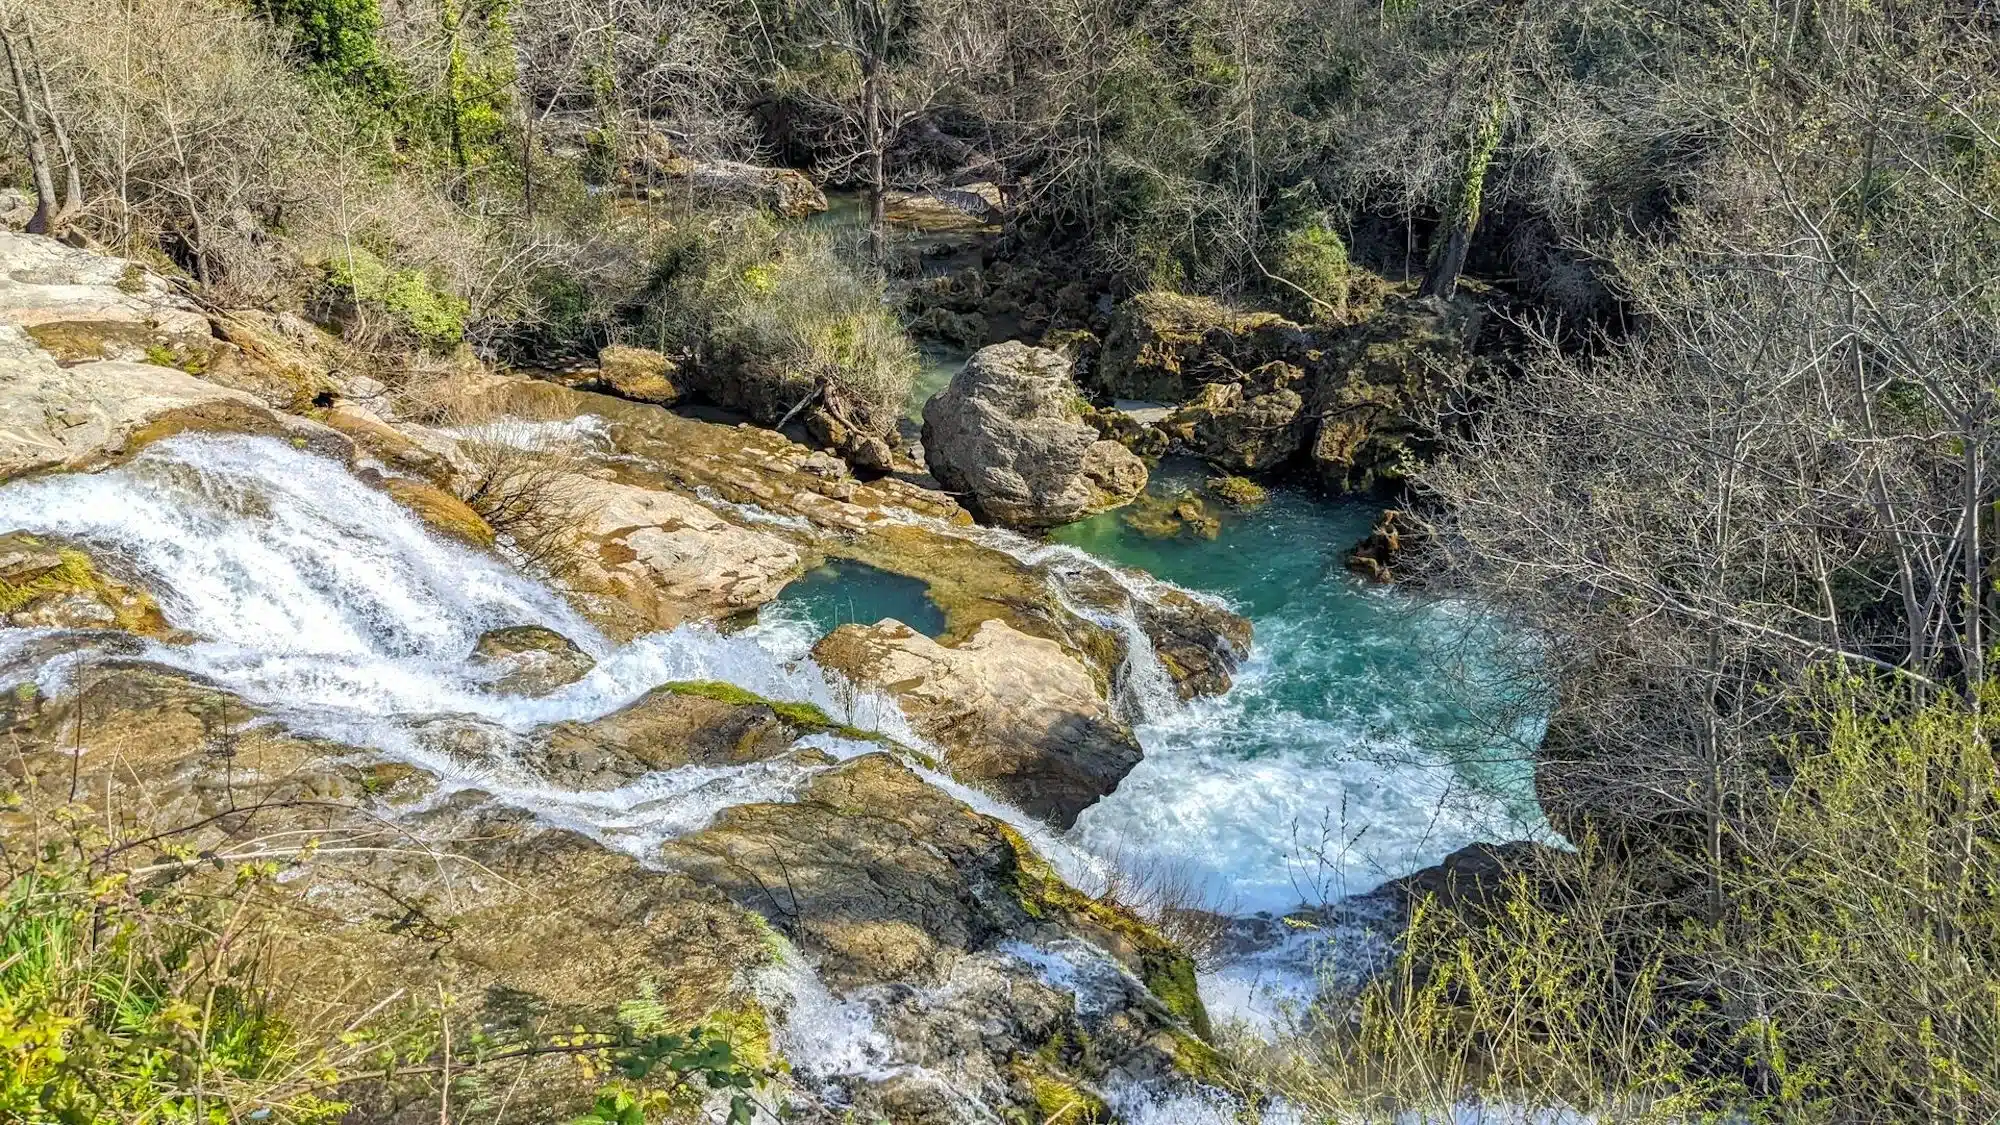 Visite de la cascade de Navacelles un joyau naturel